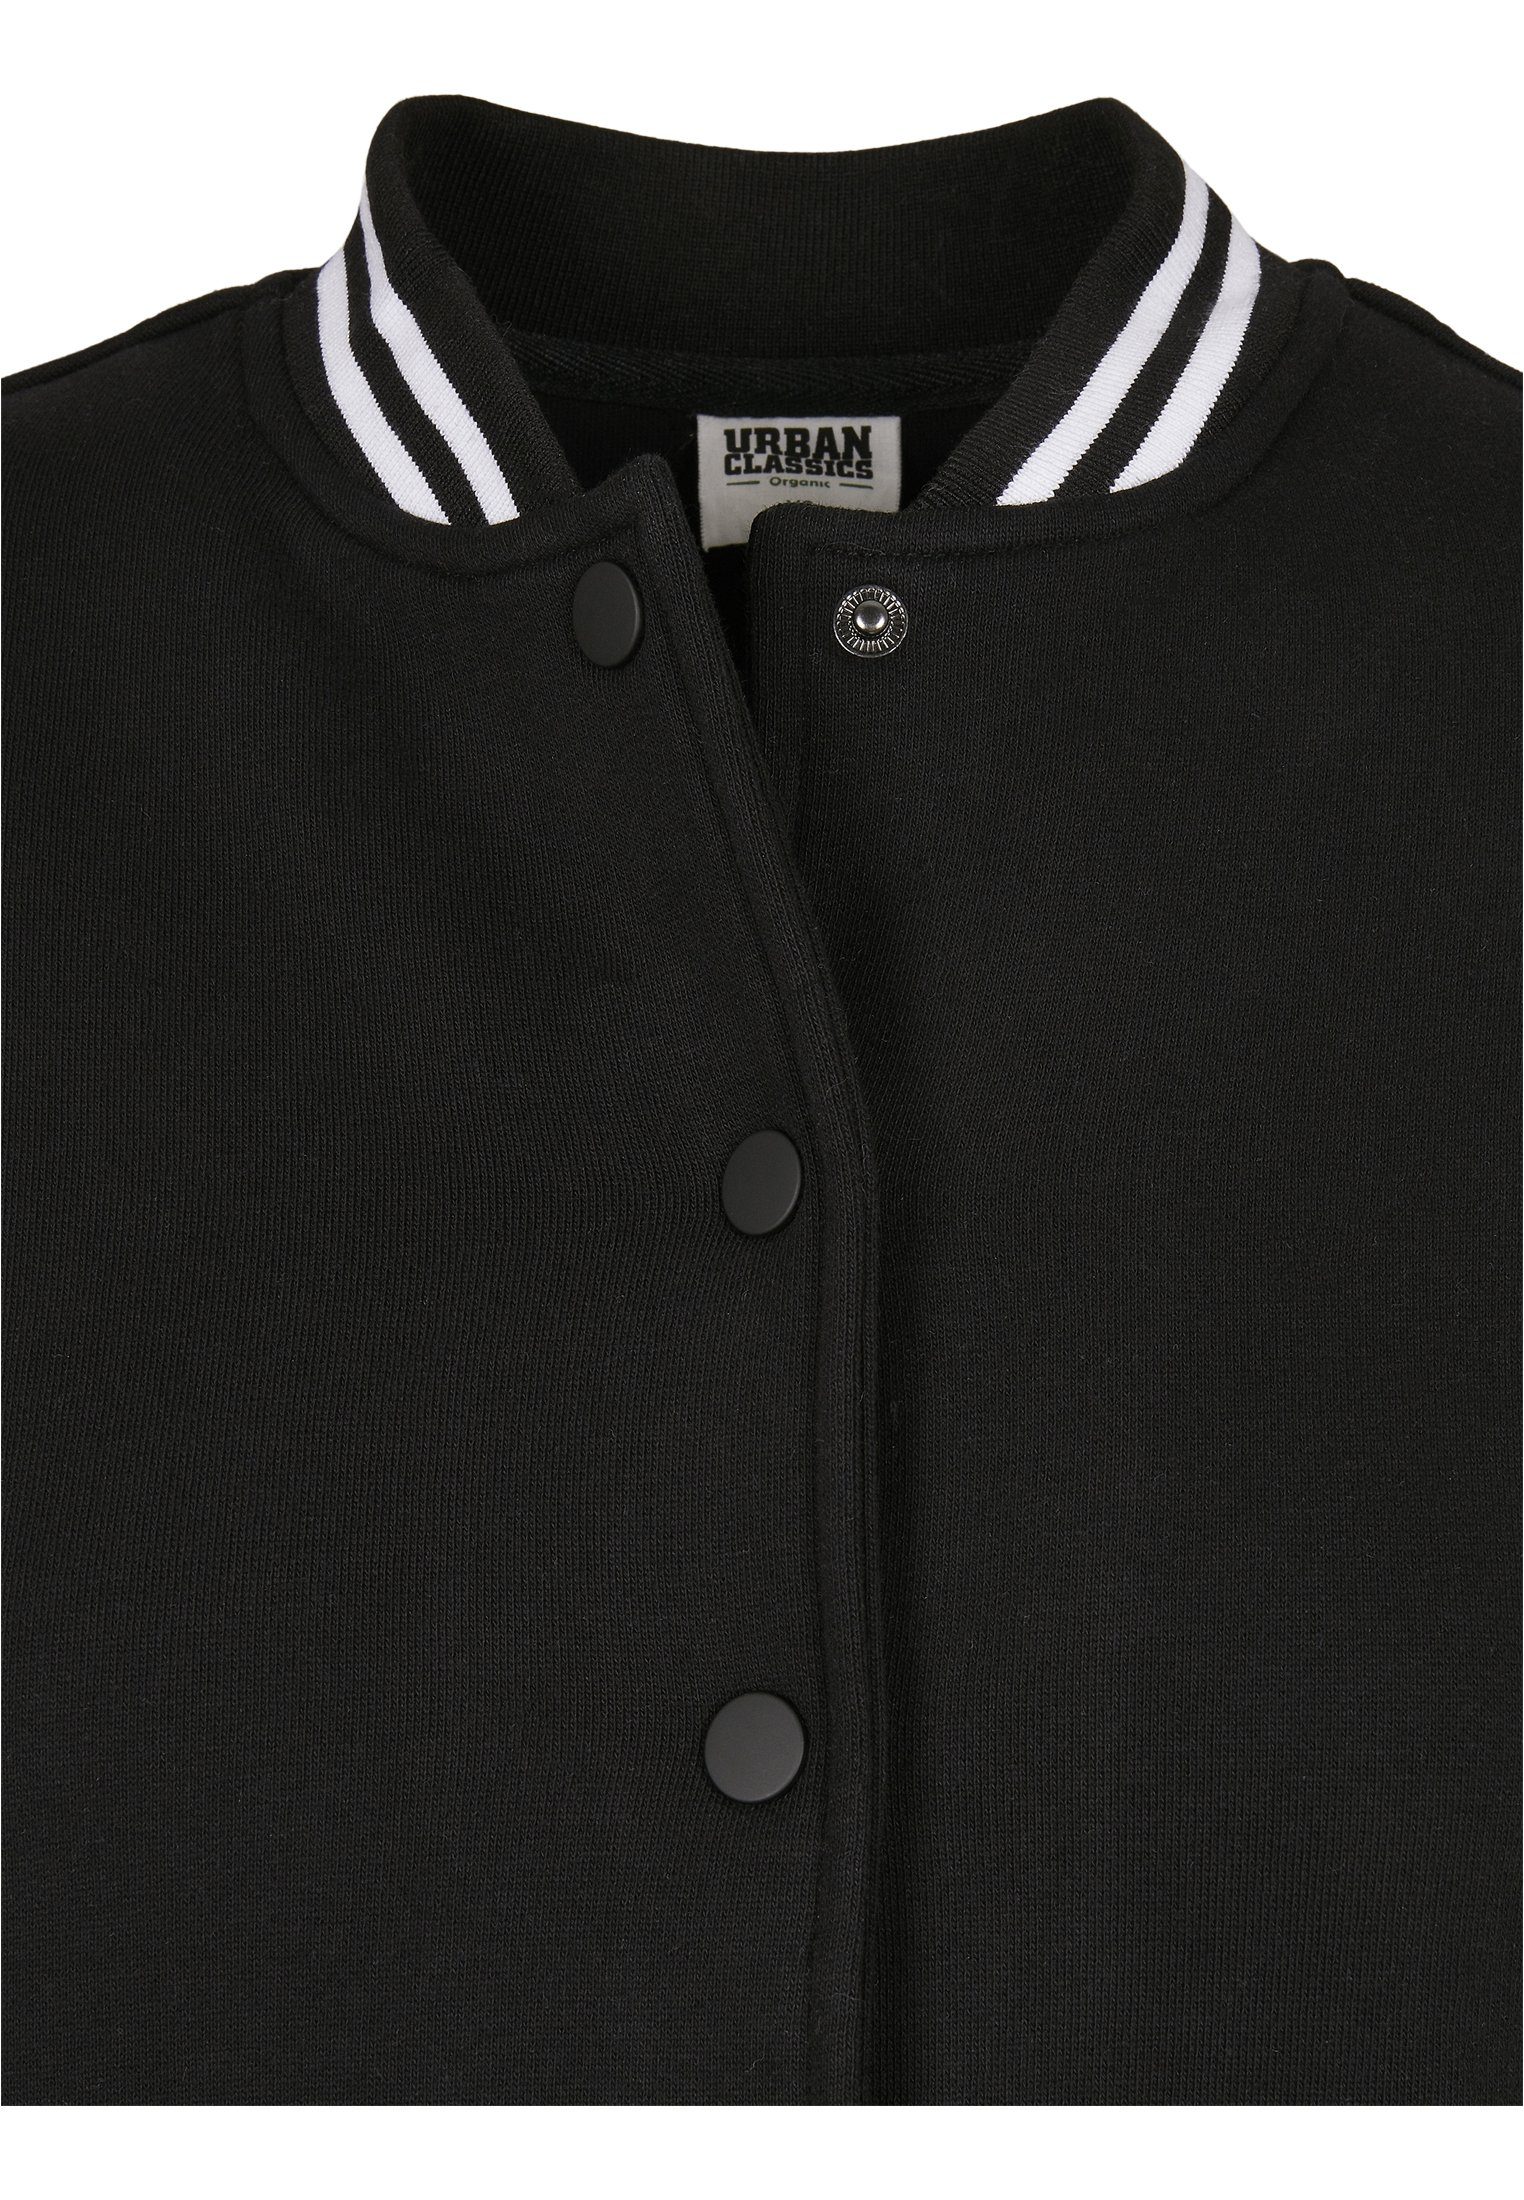 CLASSICS (1-St) Ladies URBAN Organic Sweat Collegejacke black/white Inset Damen Jacket College